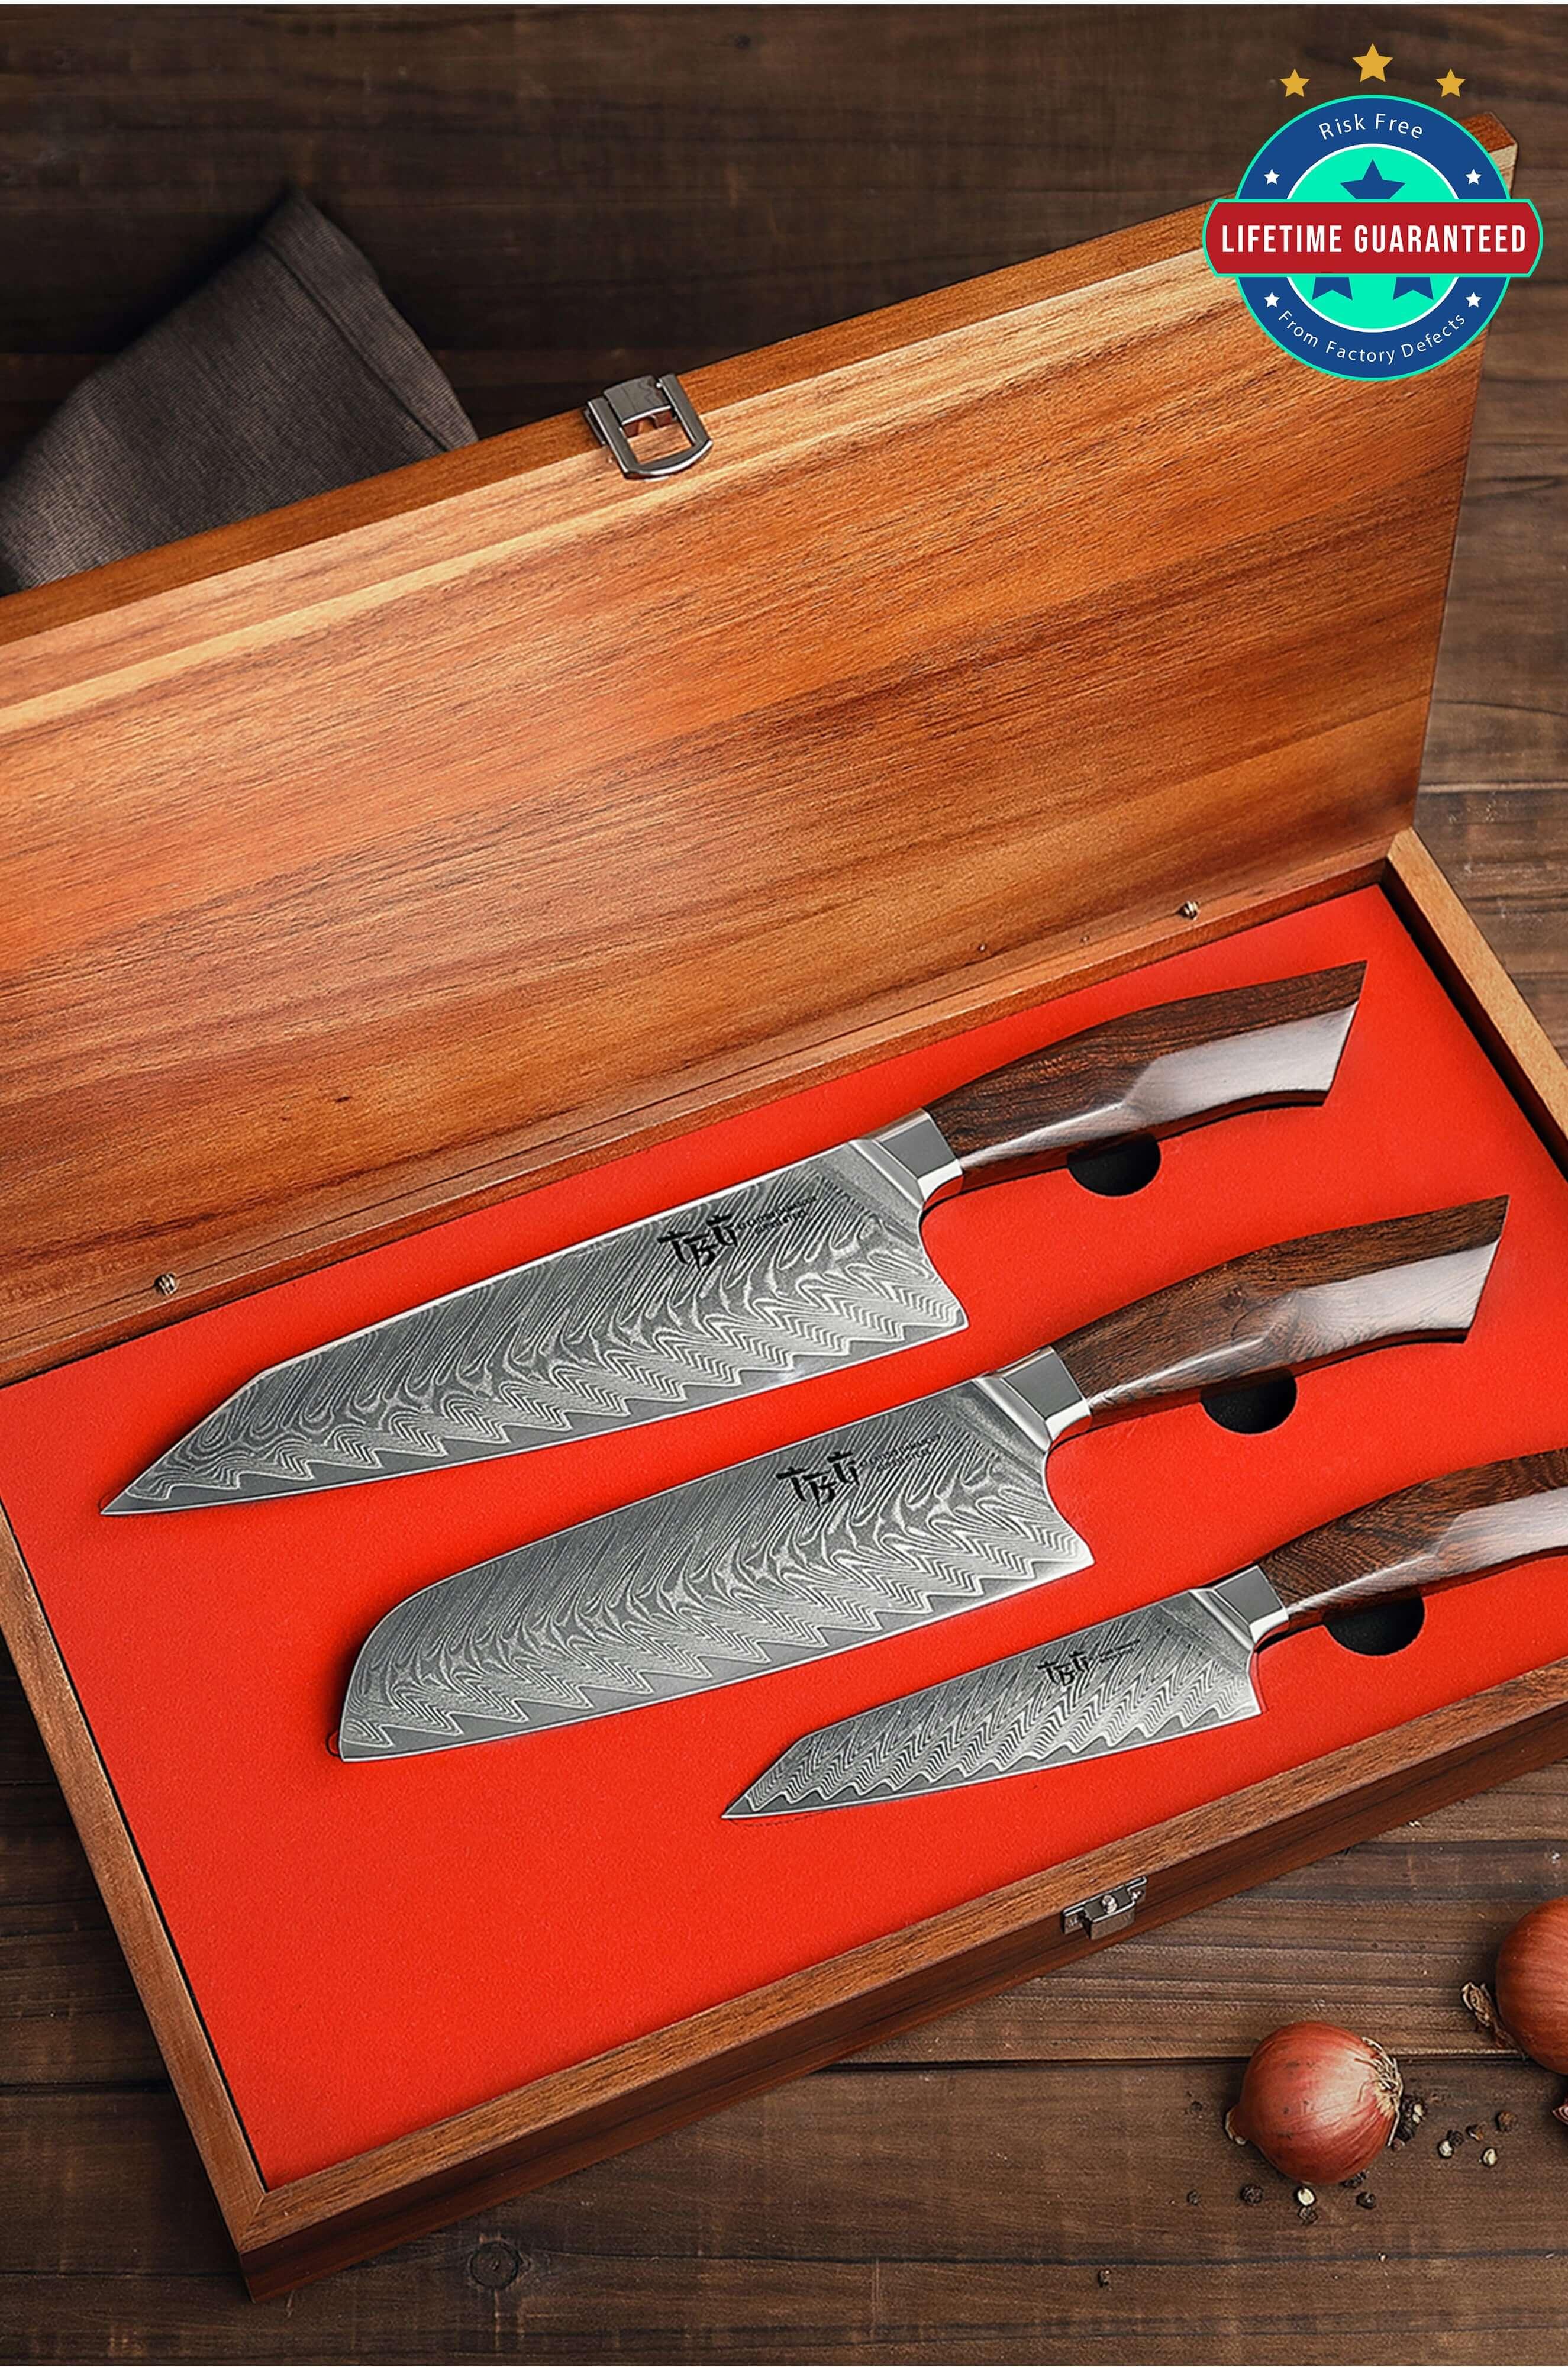 YARENH 8 Bread Knife - High Quality Kitchen Knives - Sharp